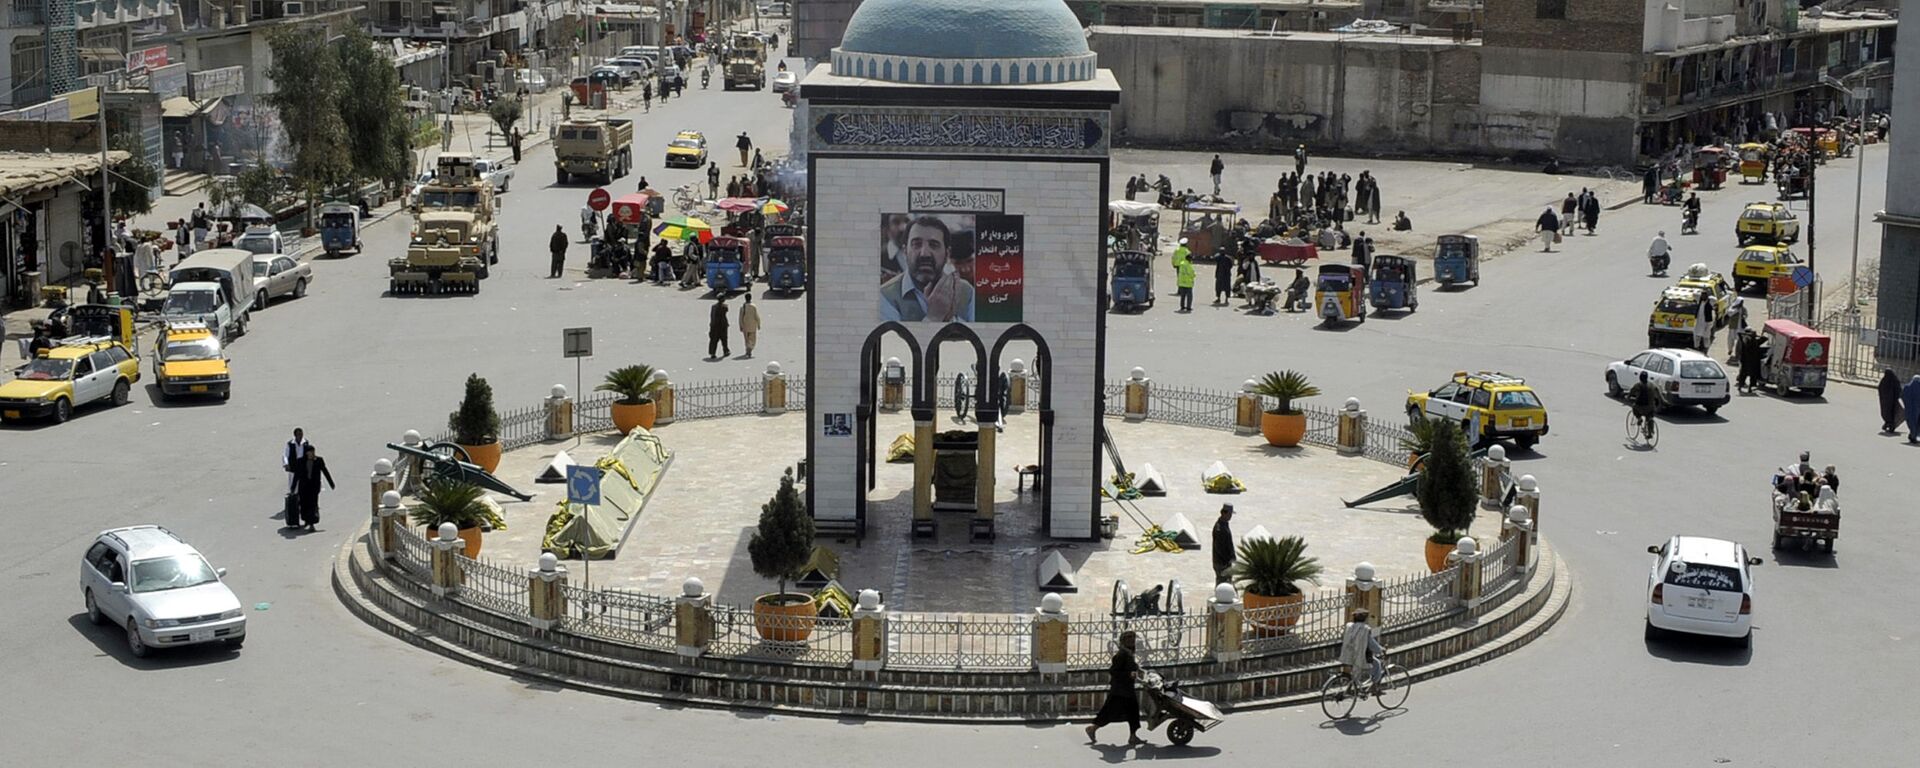 Площадь в центре Кандагара, Афганистан - اسپوتنیک افغانستان  , 1920, 30.03.2021